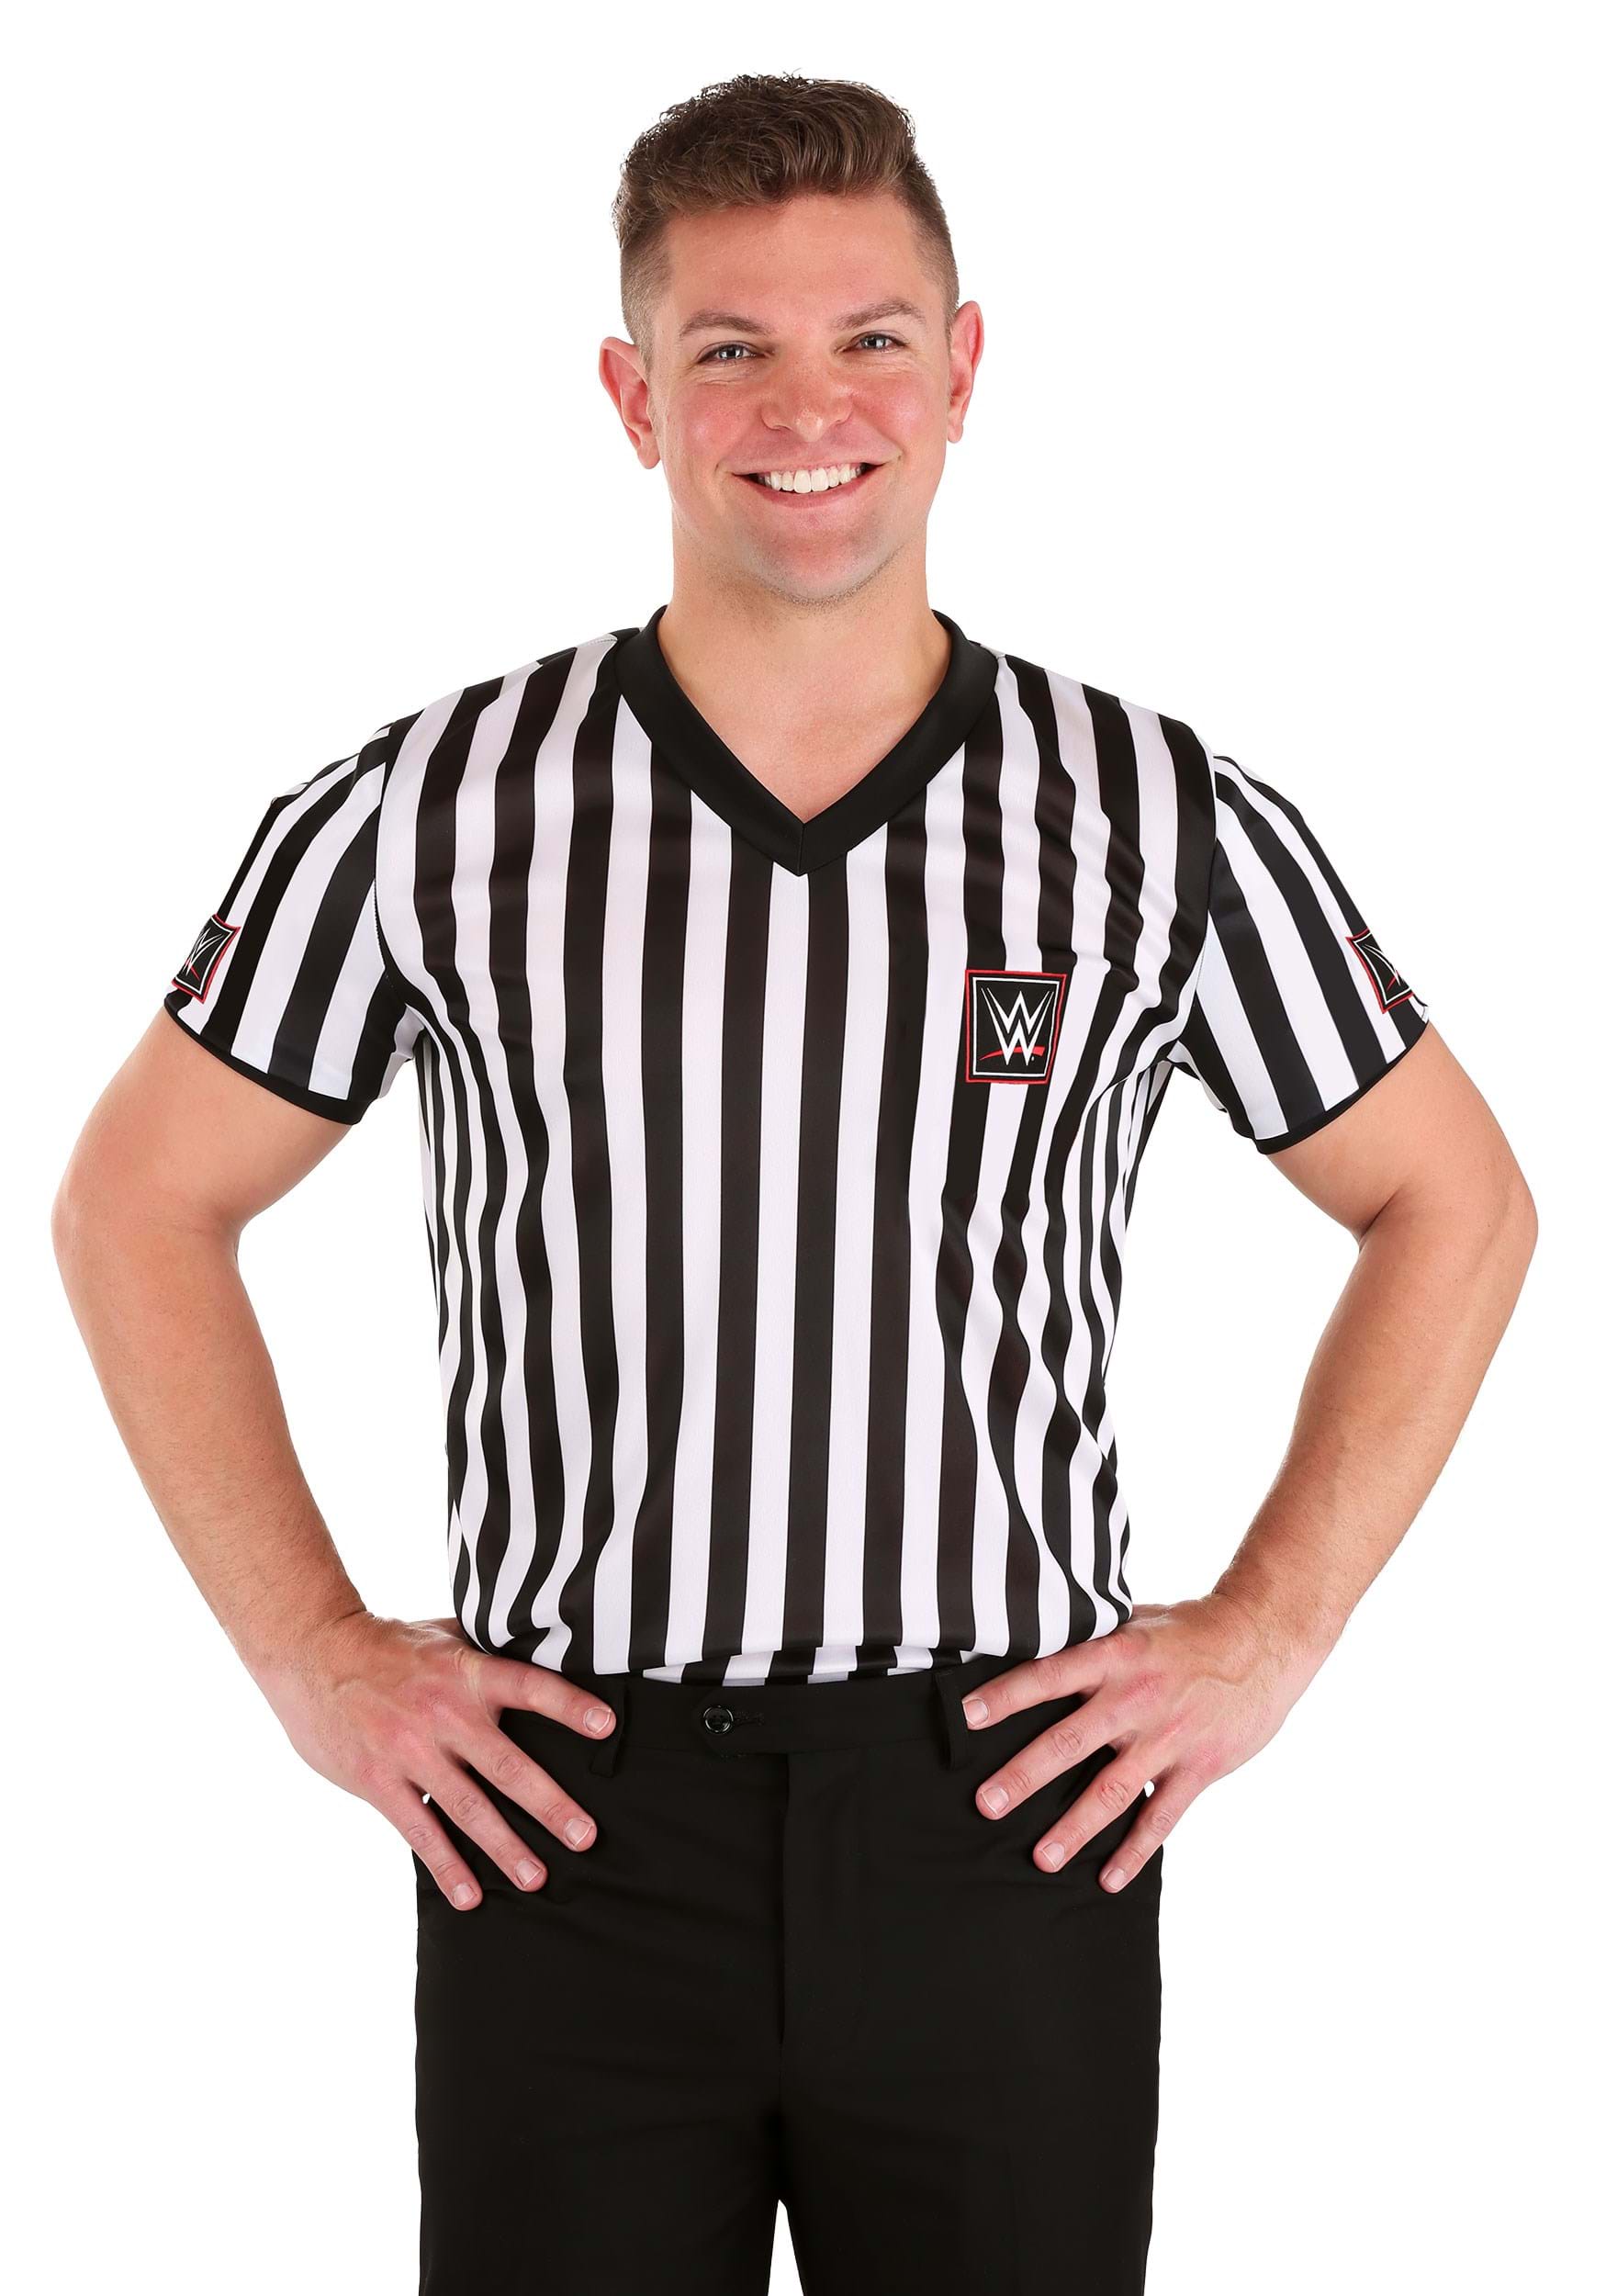 Mens Referee Shirt Costume WWE